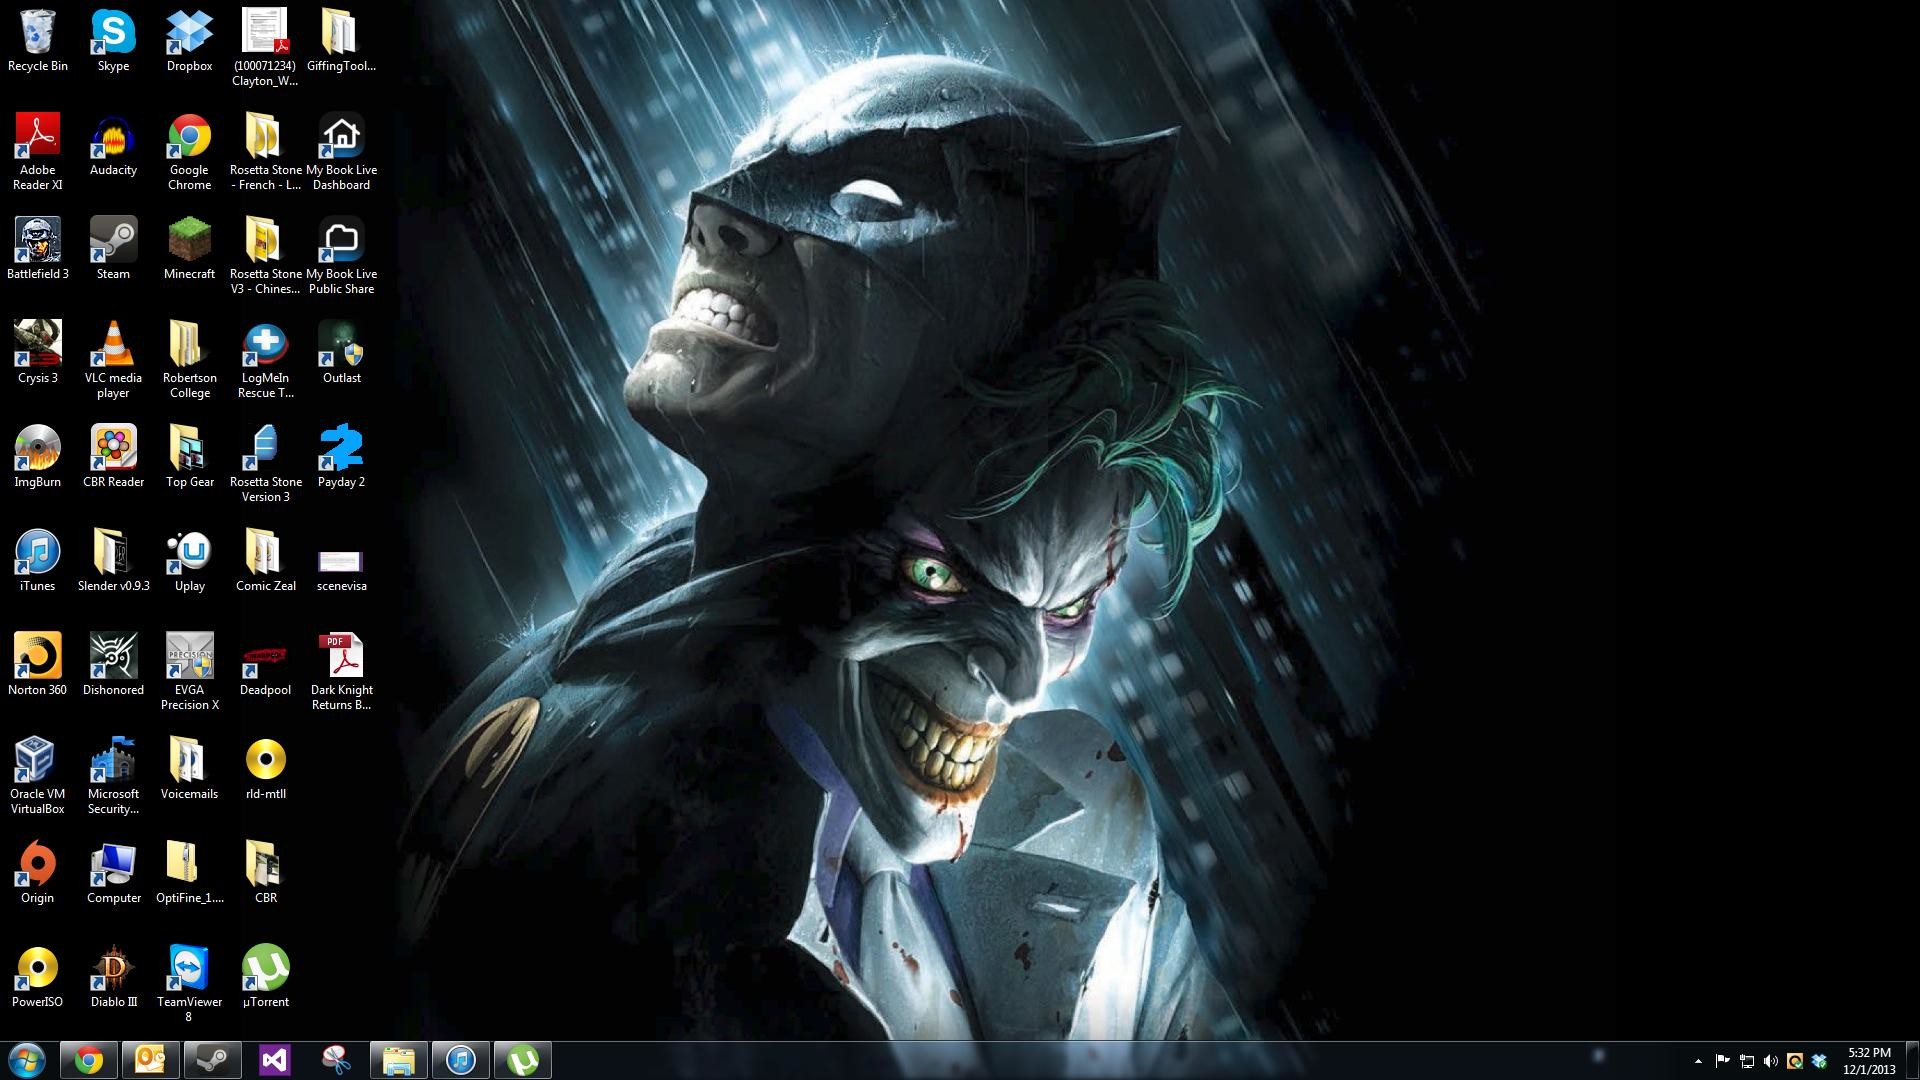 My new desktop background, from The Dark Knight Returns OST